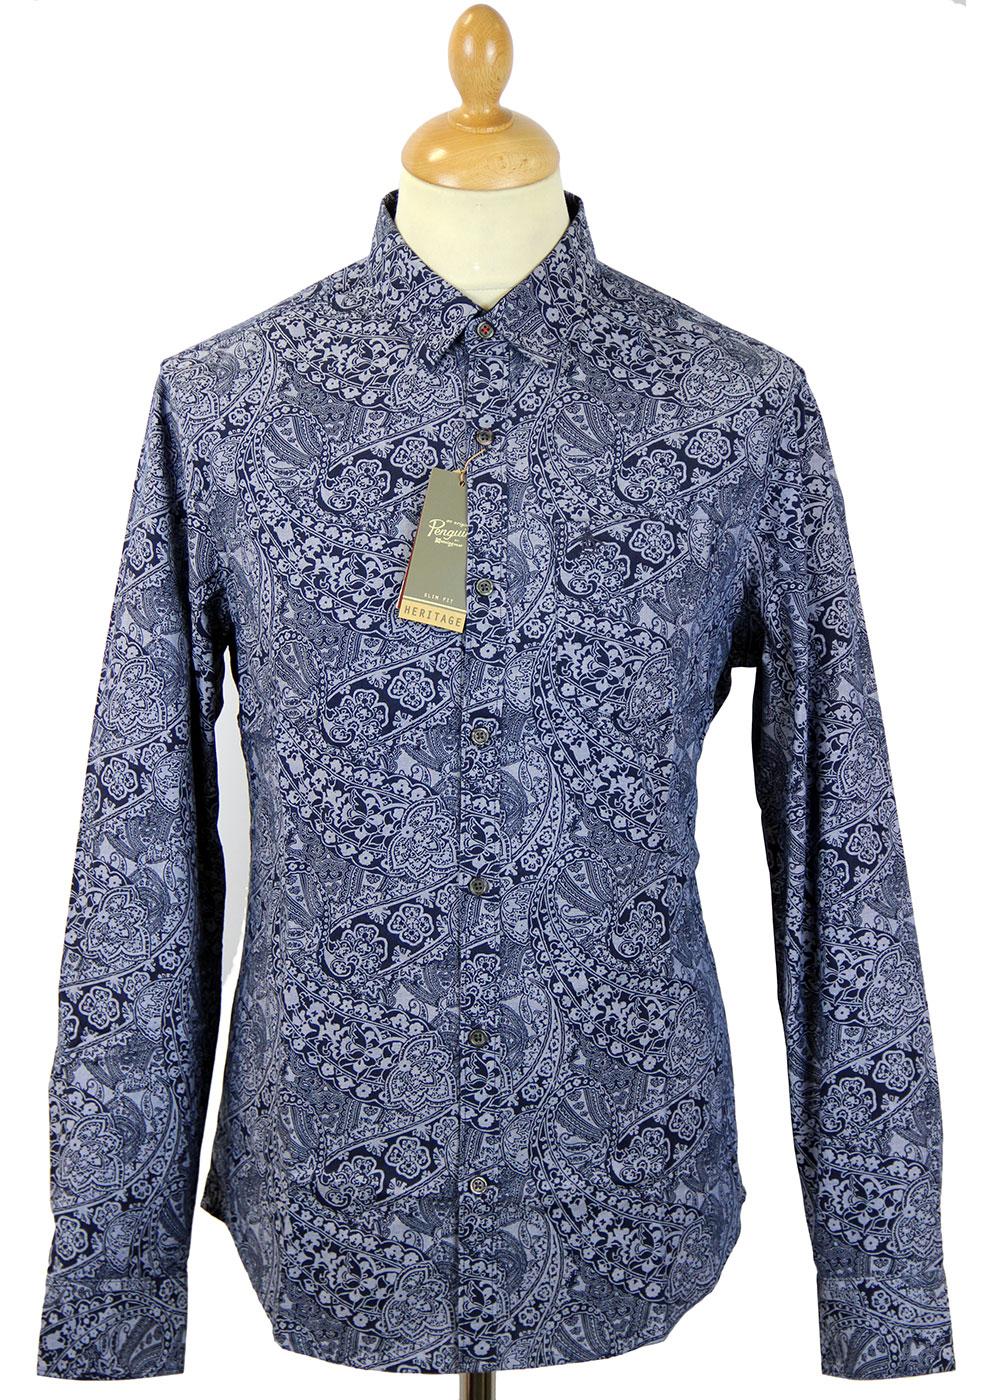 Landri ORIGINAL PENGUIN Mod Paisley Oxford Shirt